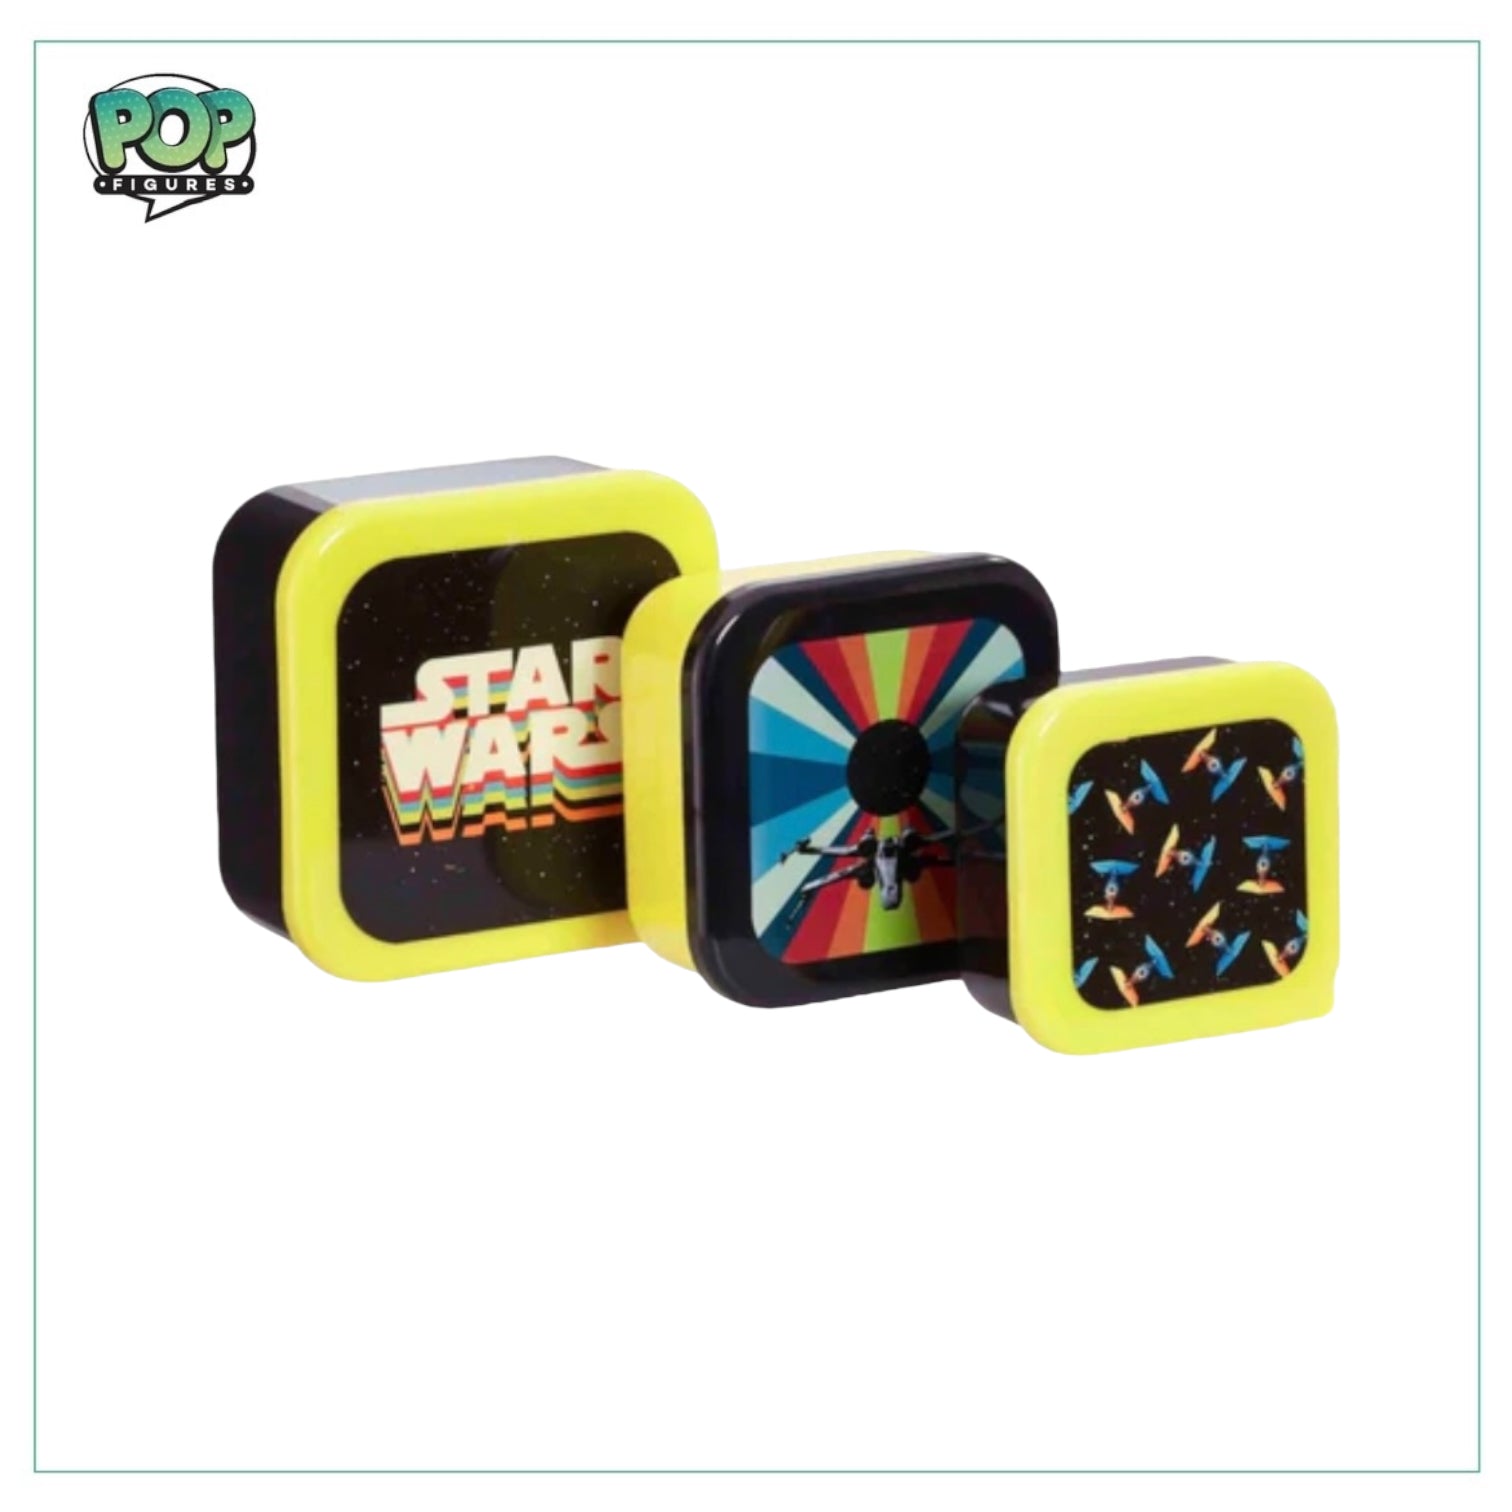 Star Wars Funko Nesting Storage Boxes - 3 Pack